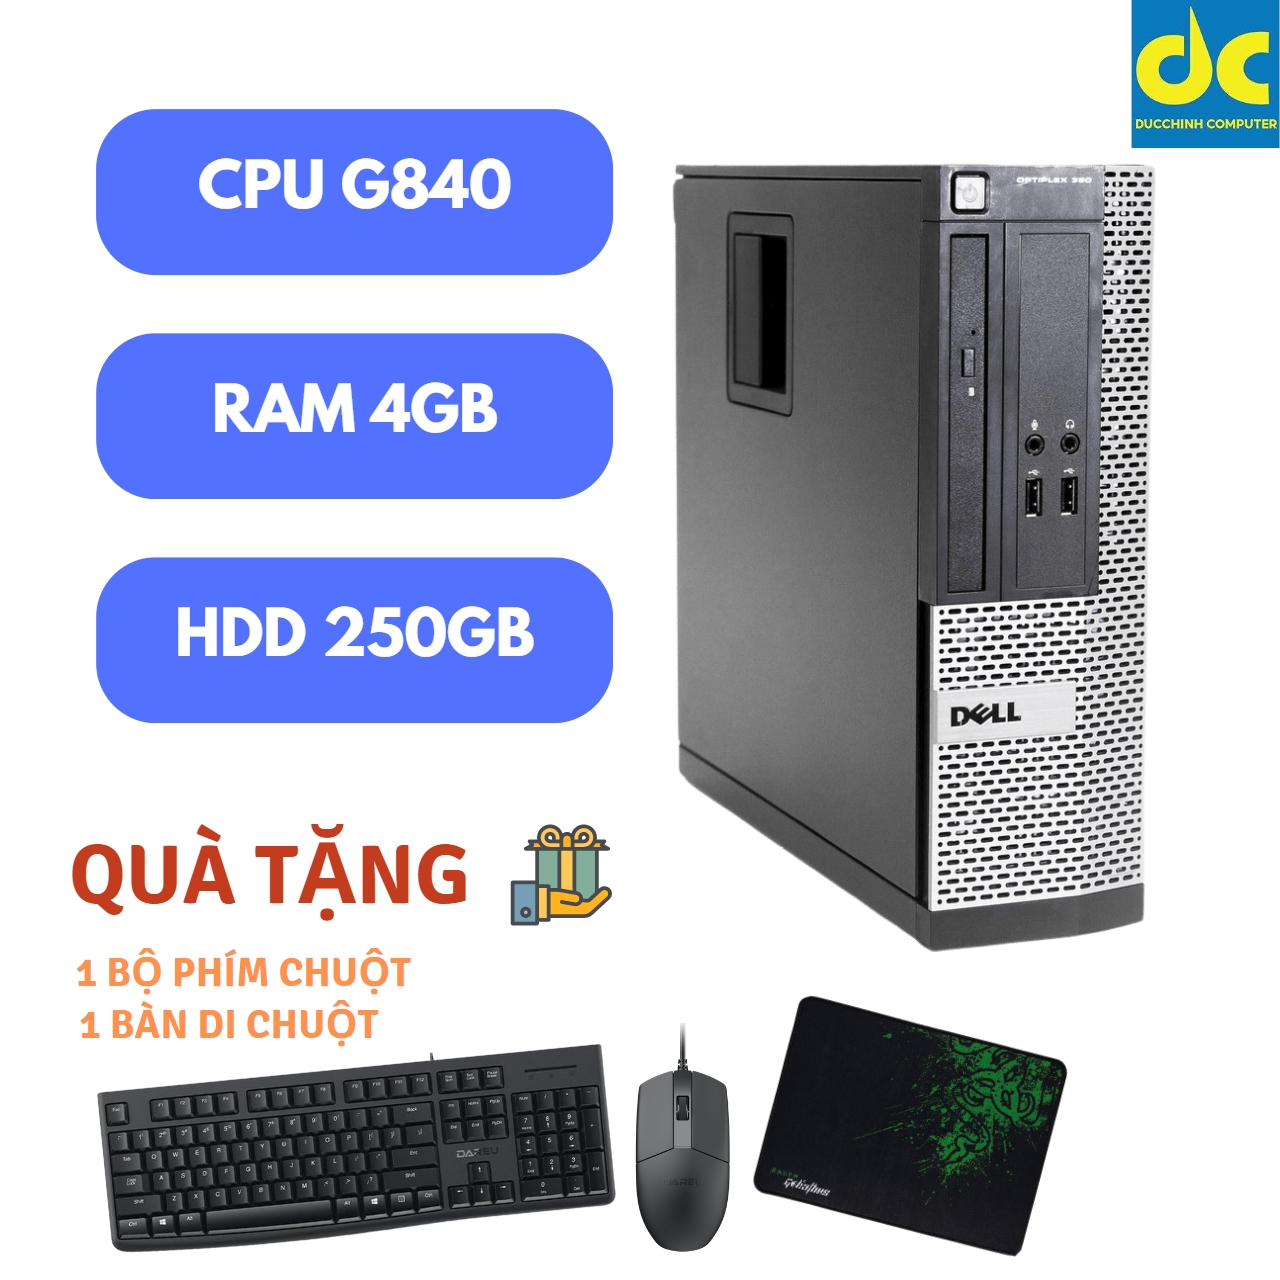 Máy tính Dell Optiplex 390/790/990, Chip G840, Ram 4GB, HDD 250GB, DVD